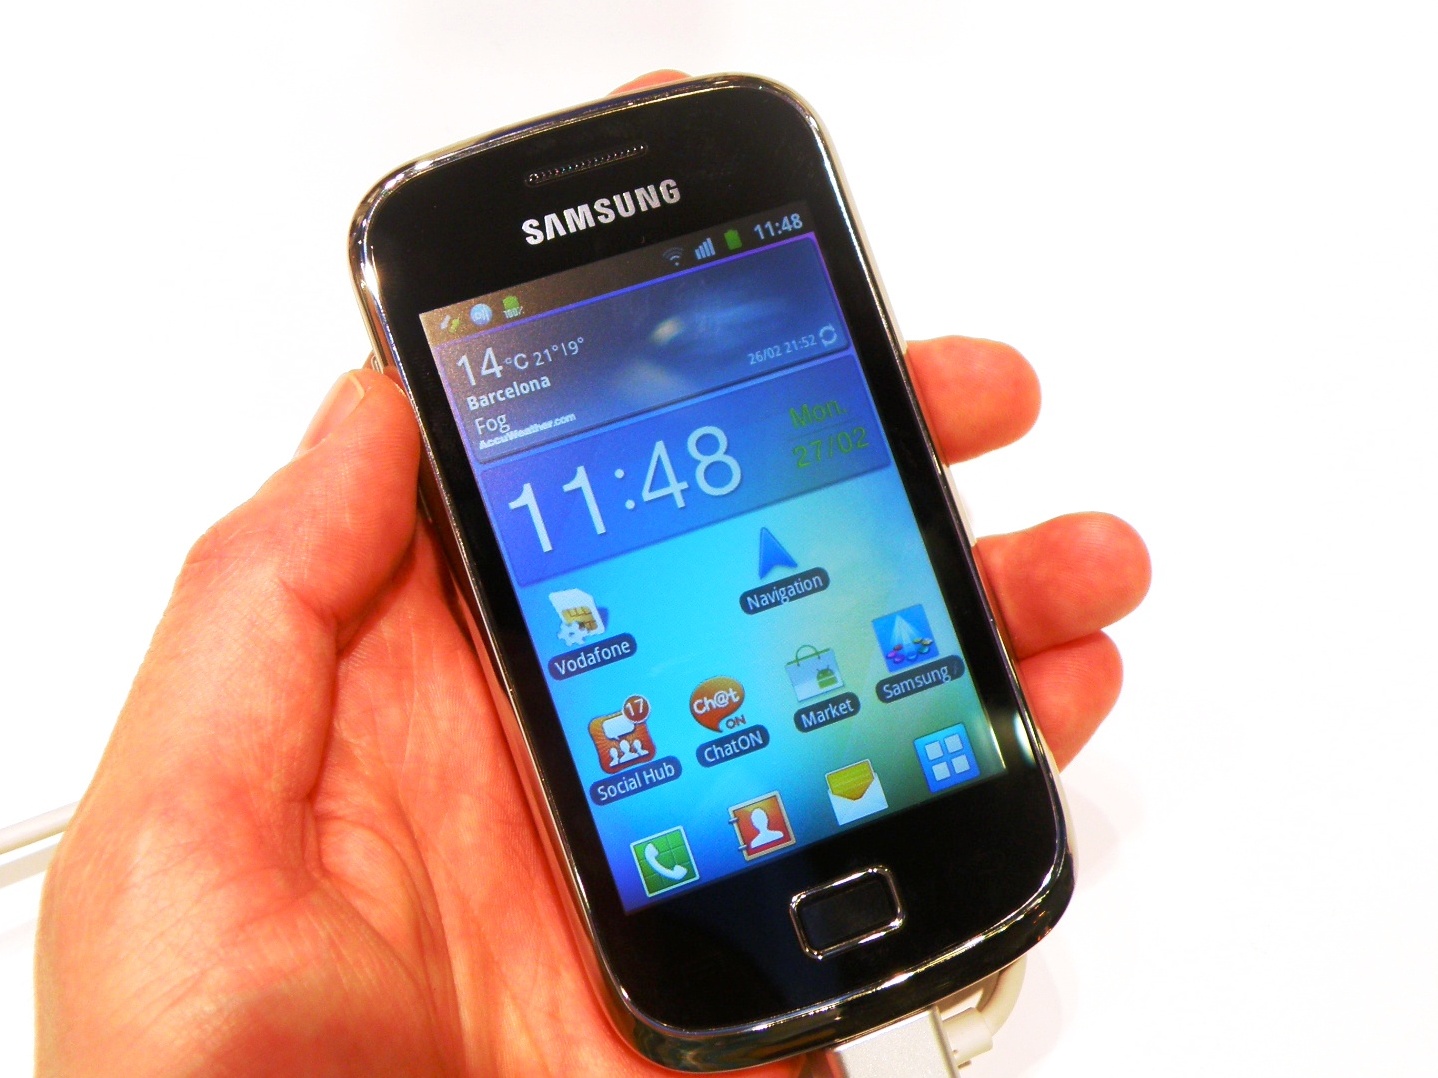 pomp tentoonstelling Ontvangst Hands on: Samsung Galaxy Mini 2 review | TechRadar